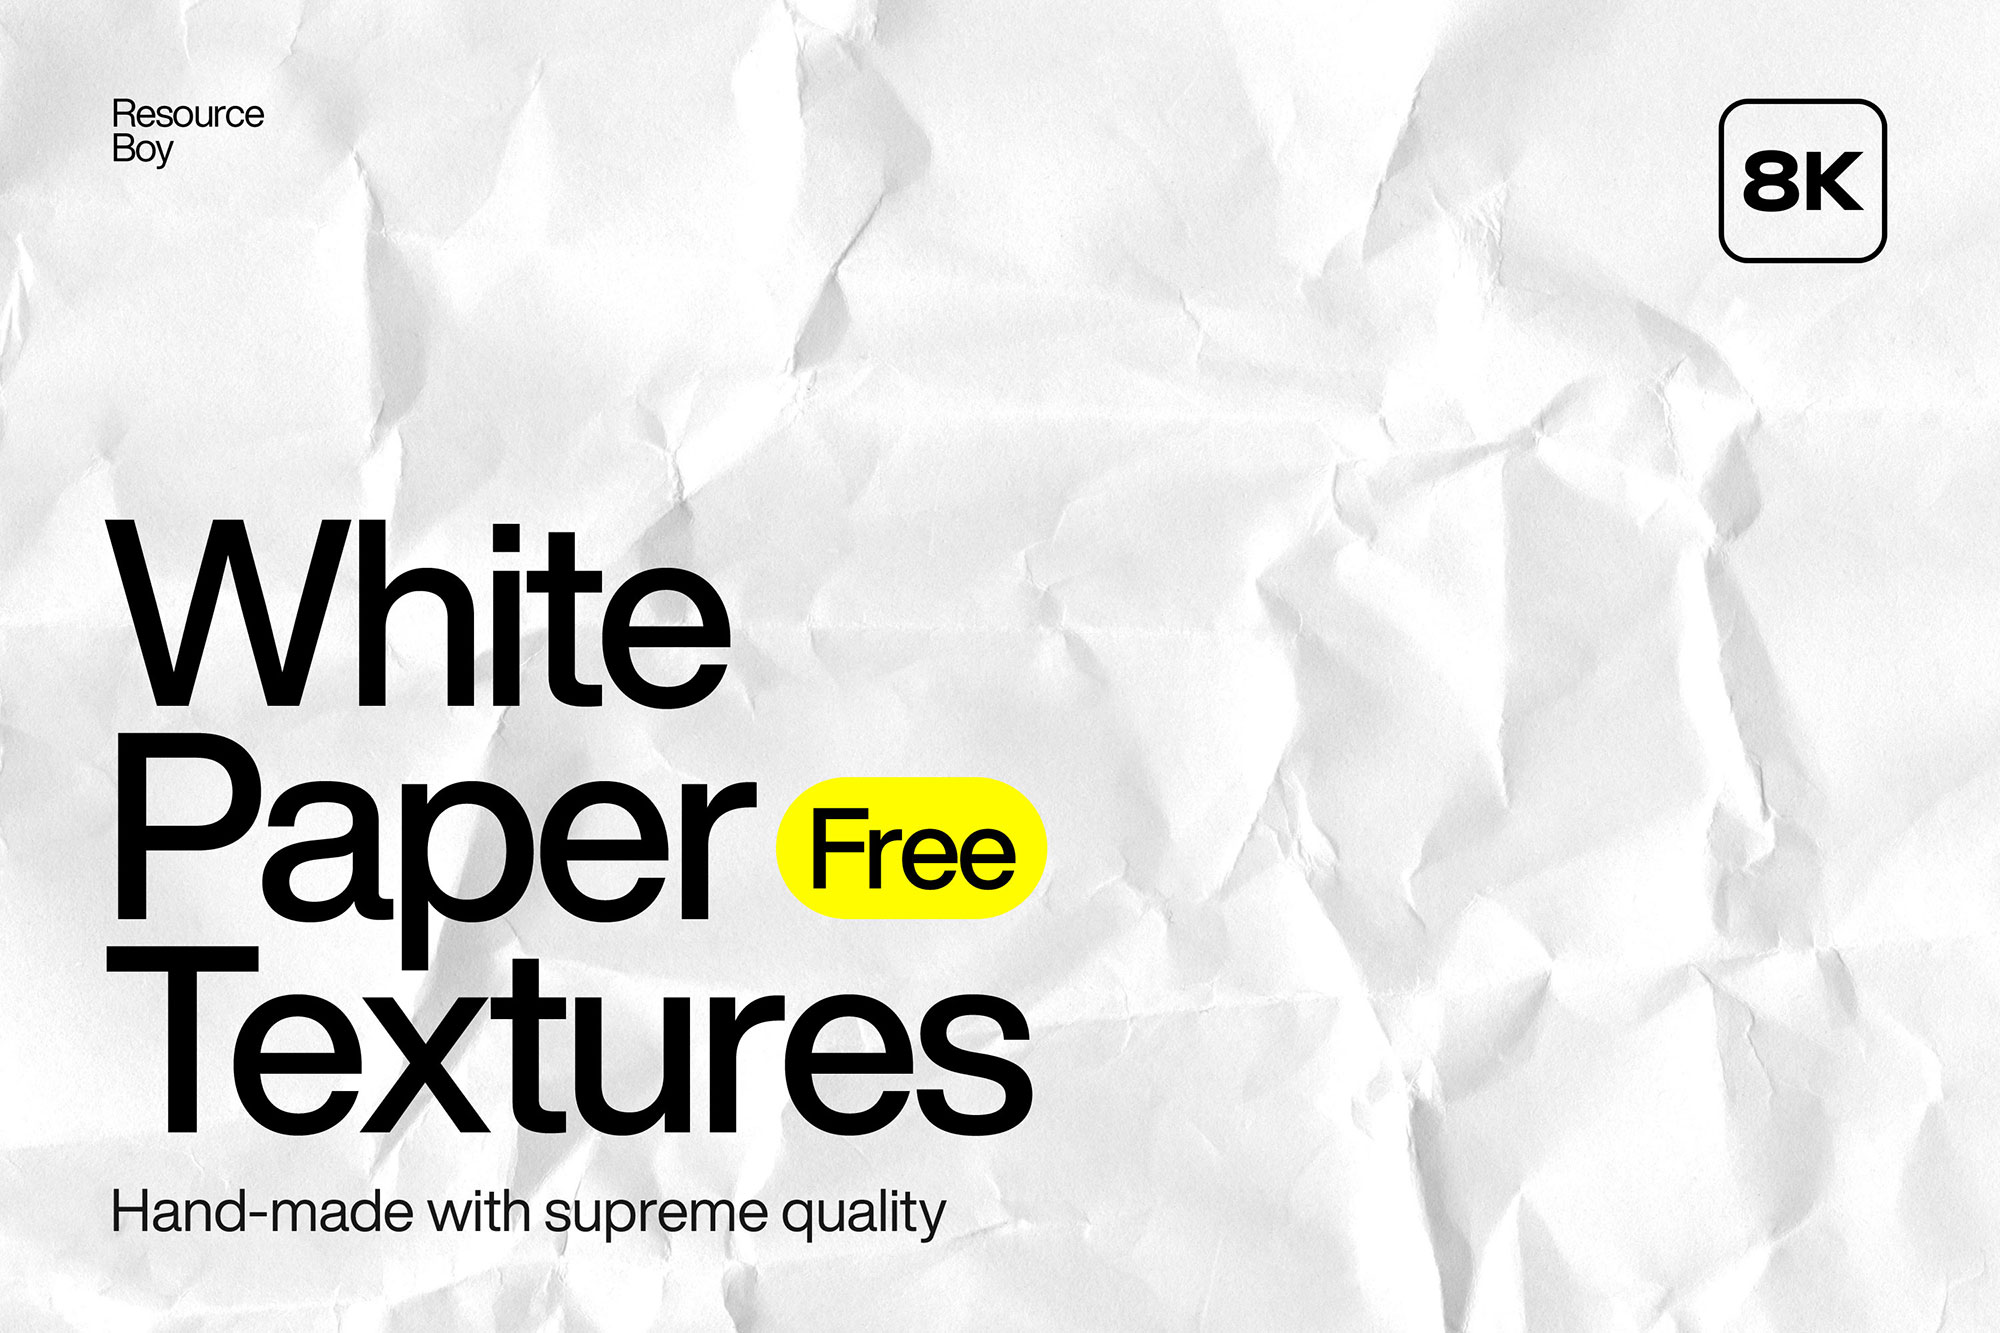 50+ Free White Paper Textures [8K Resolution] - Resource Boy